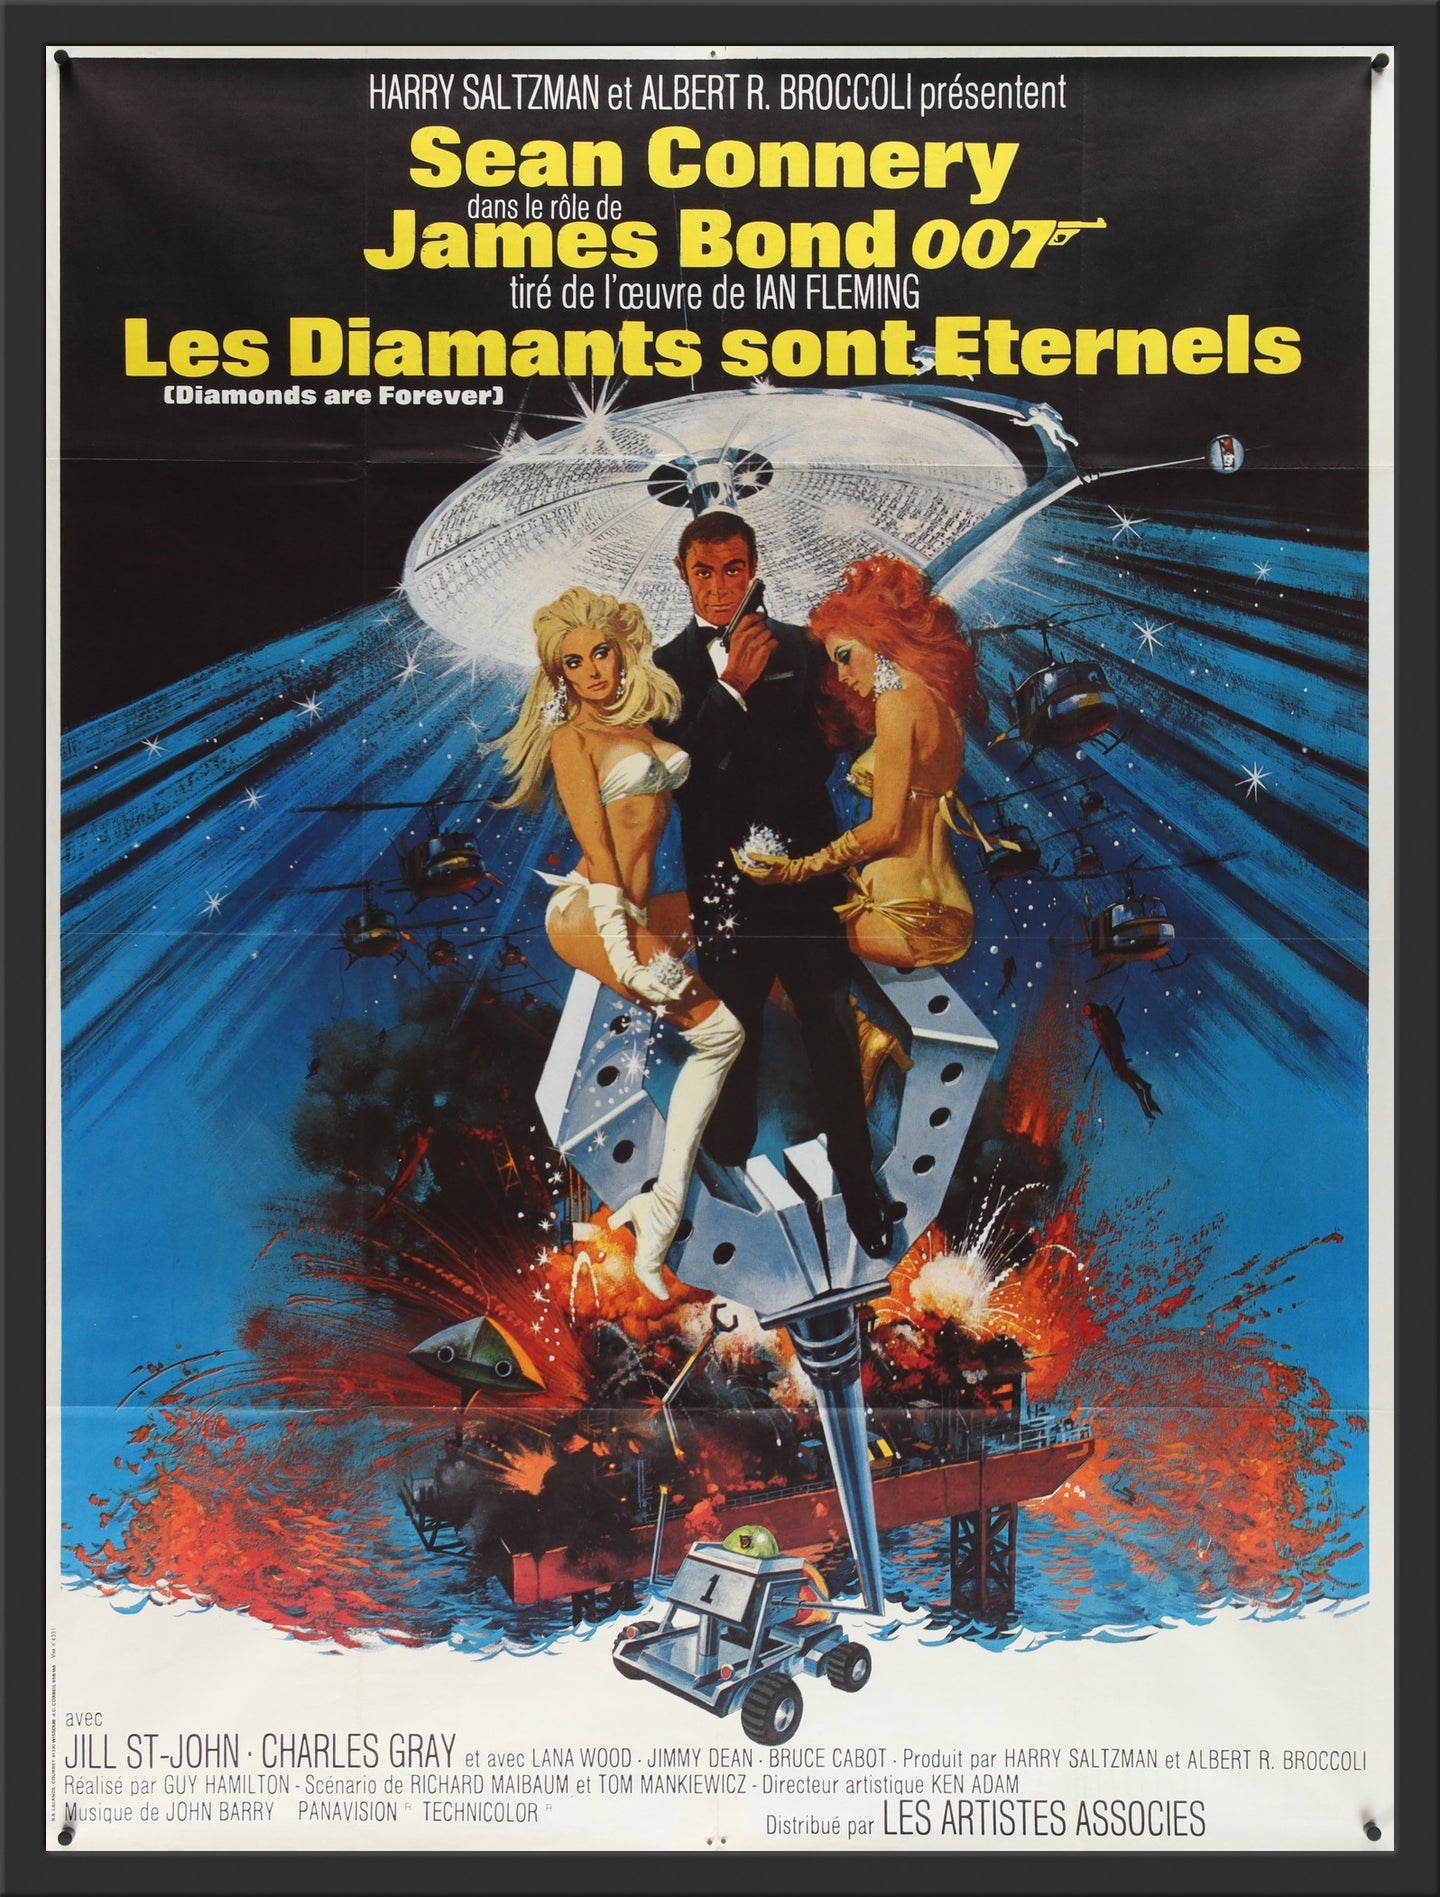 An original French Grande movie poster for the James Bond film Diamonds Are Forever